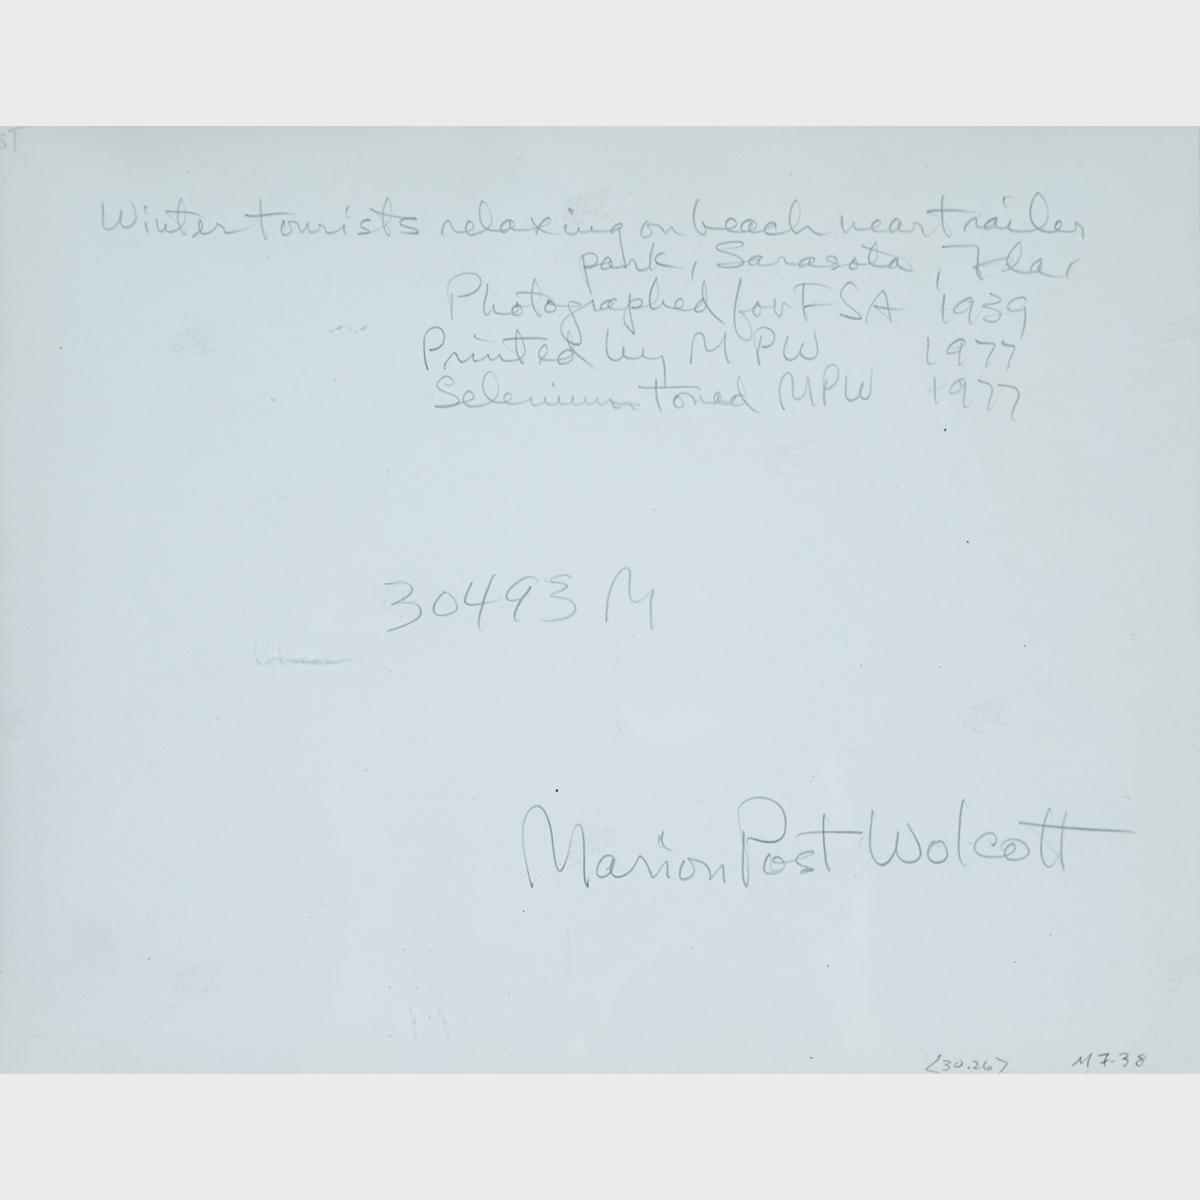 MARION POST WOLCOTT (1910-1990)